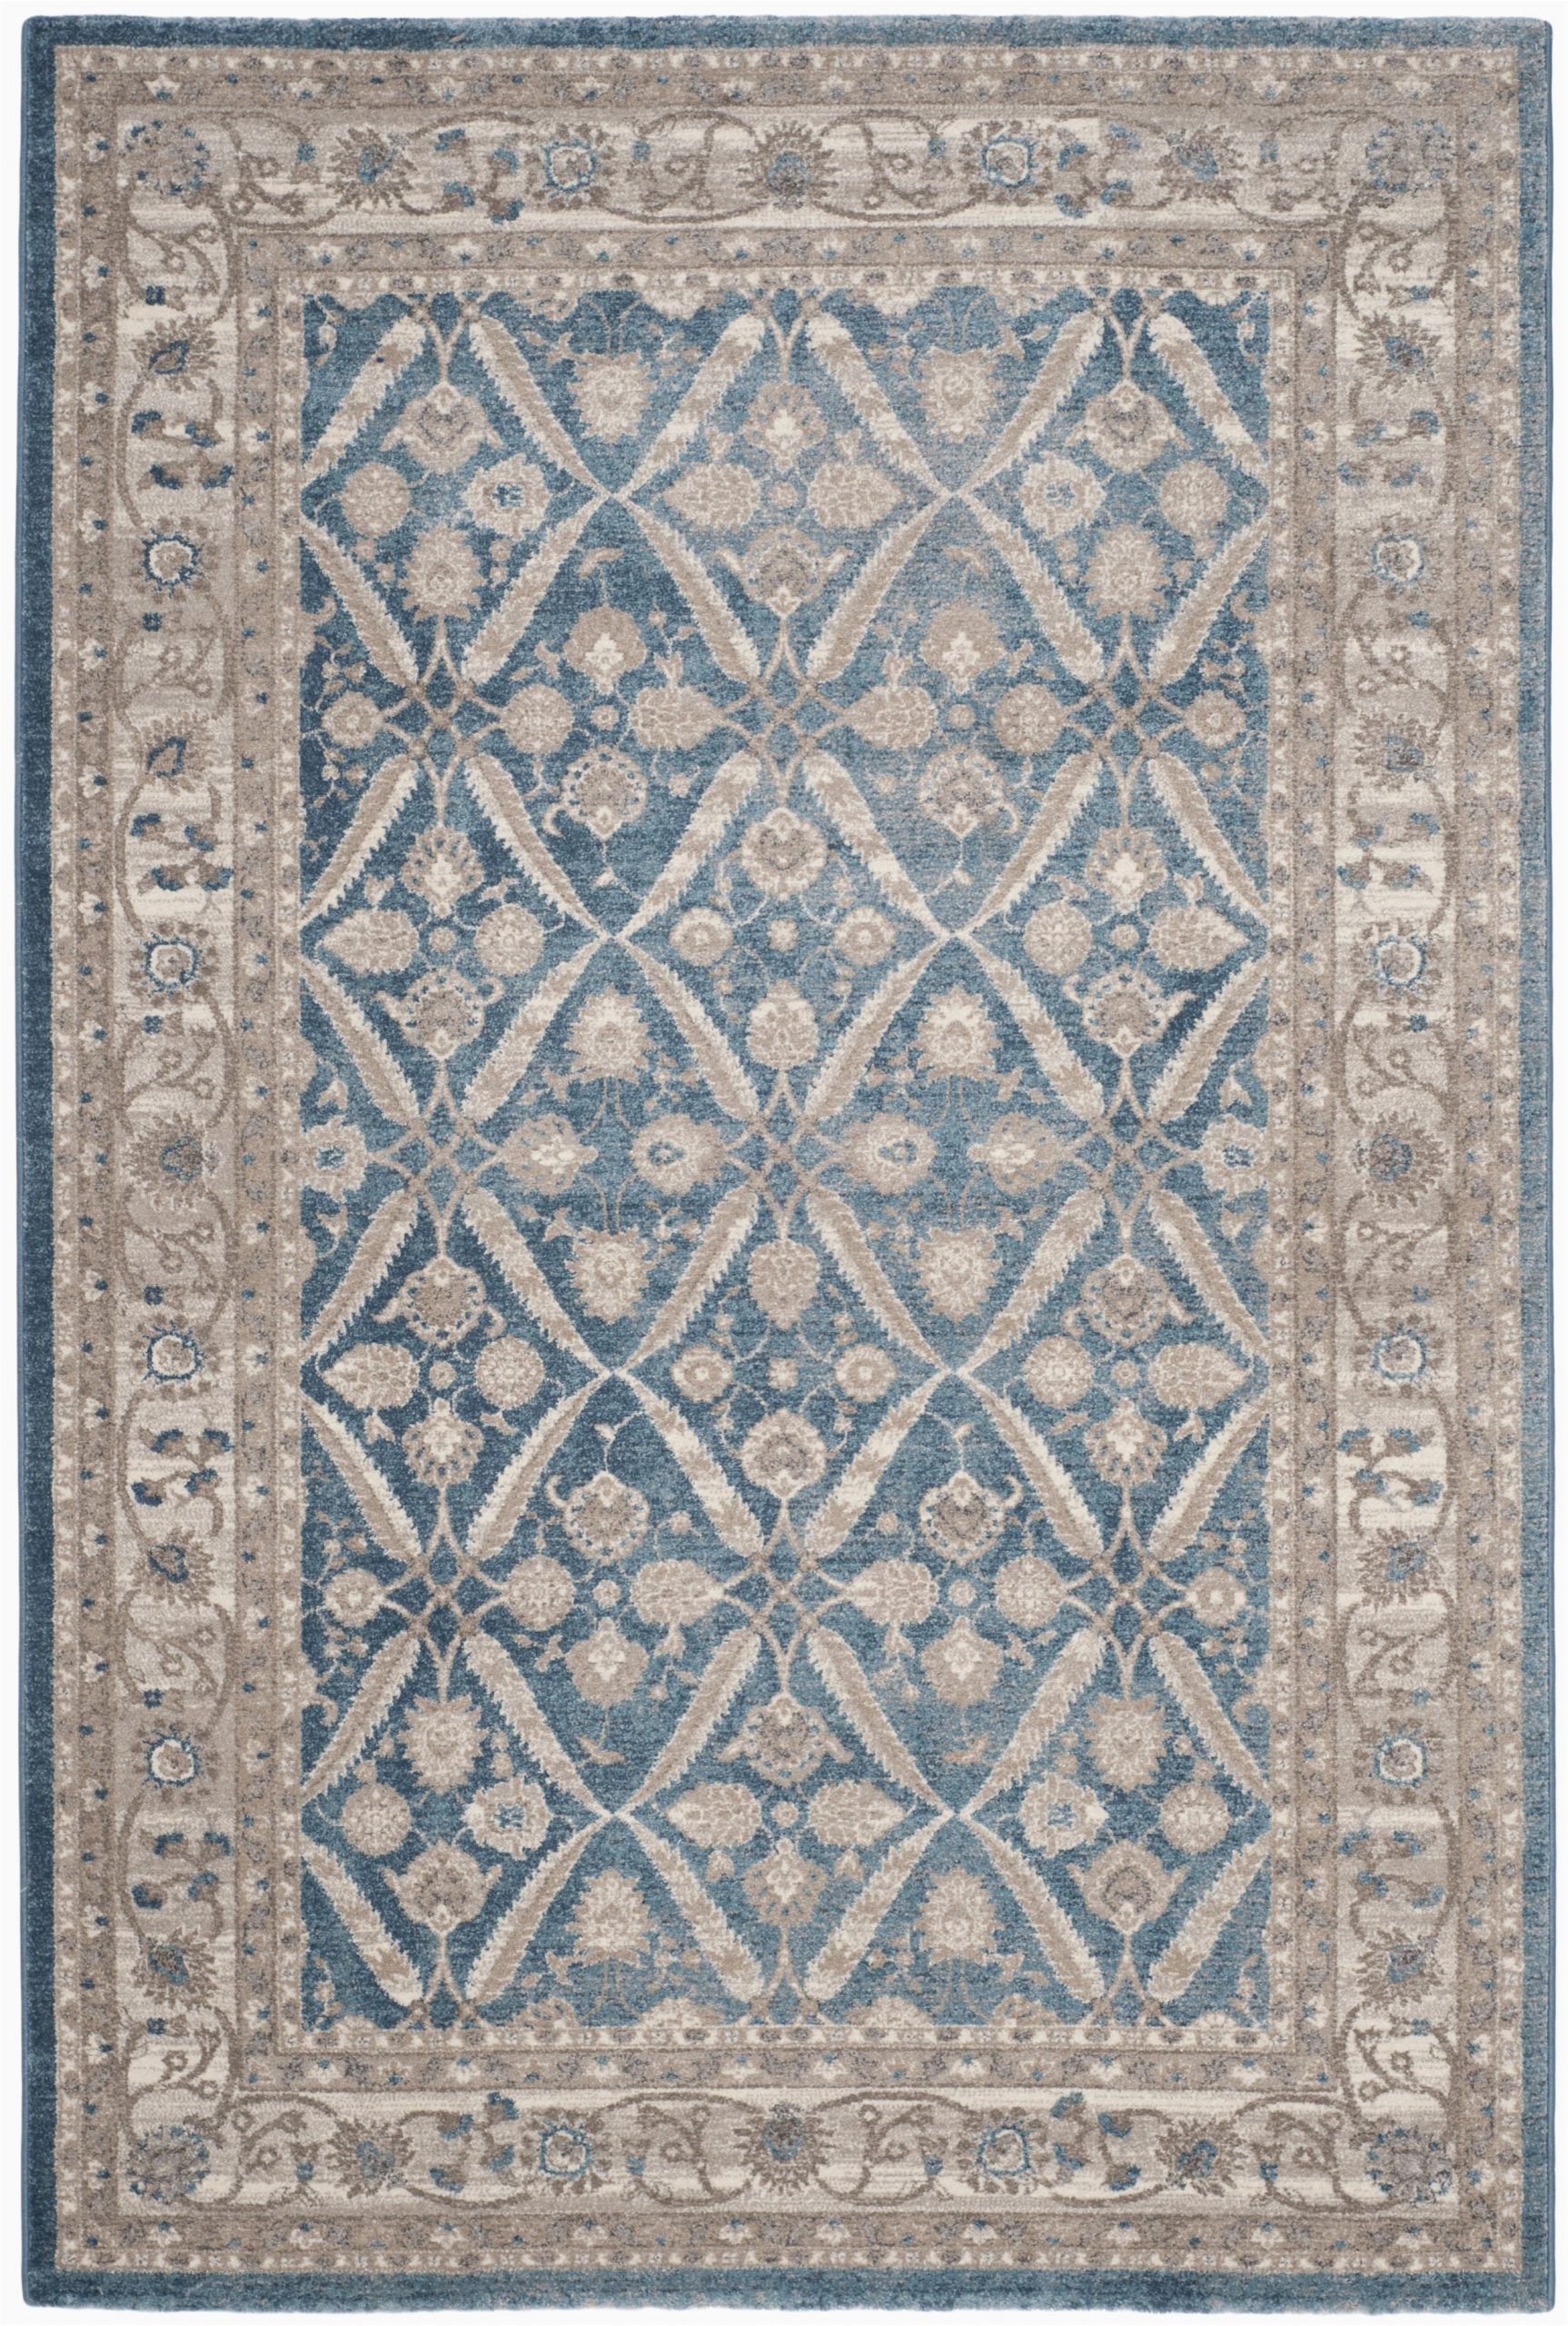 statham oriental bluebeige area rug